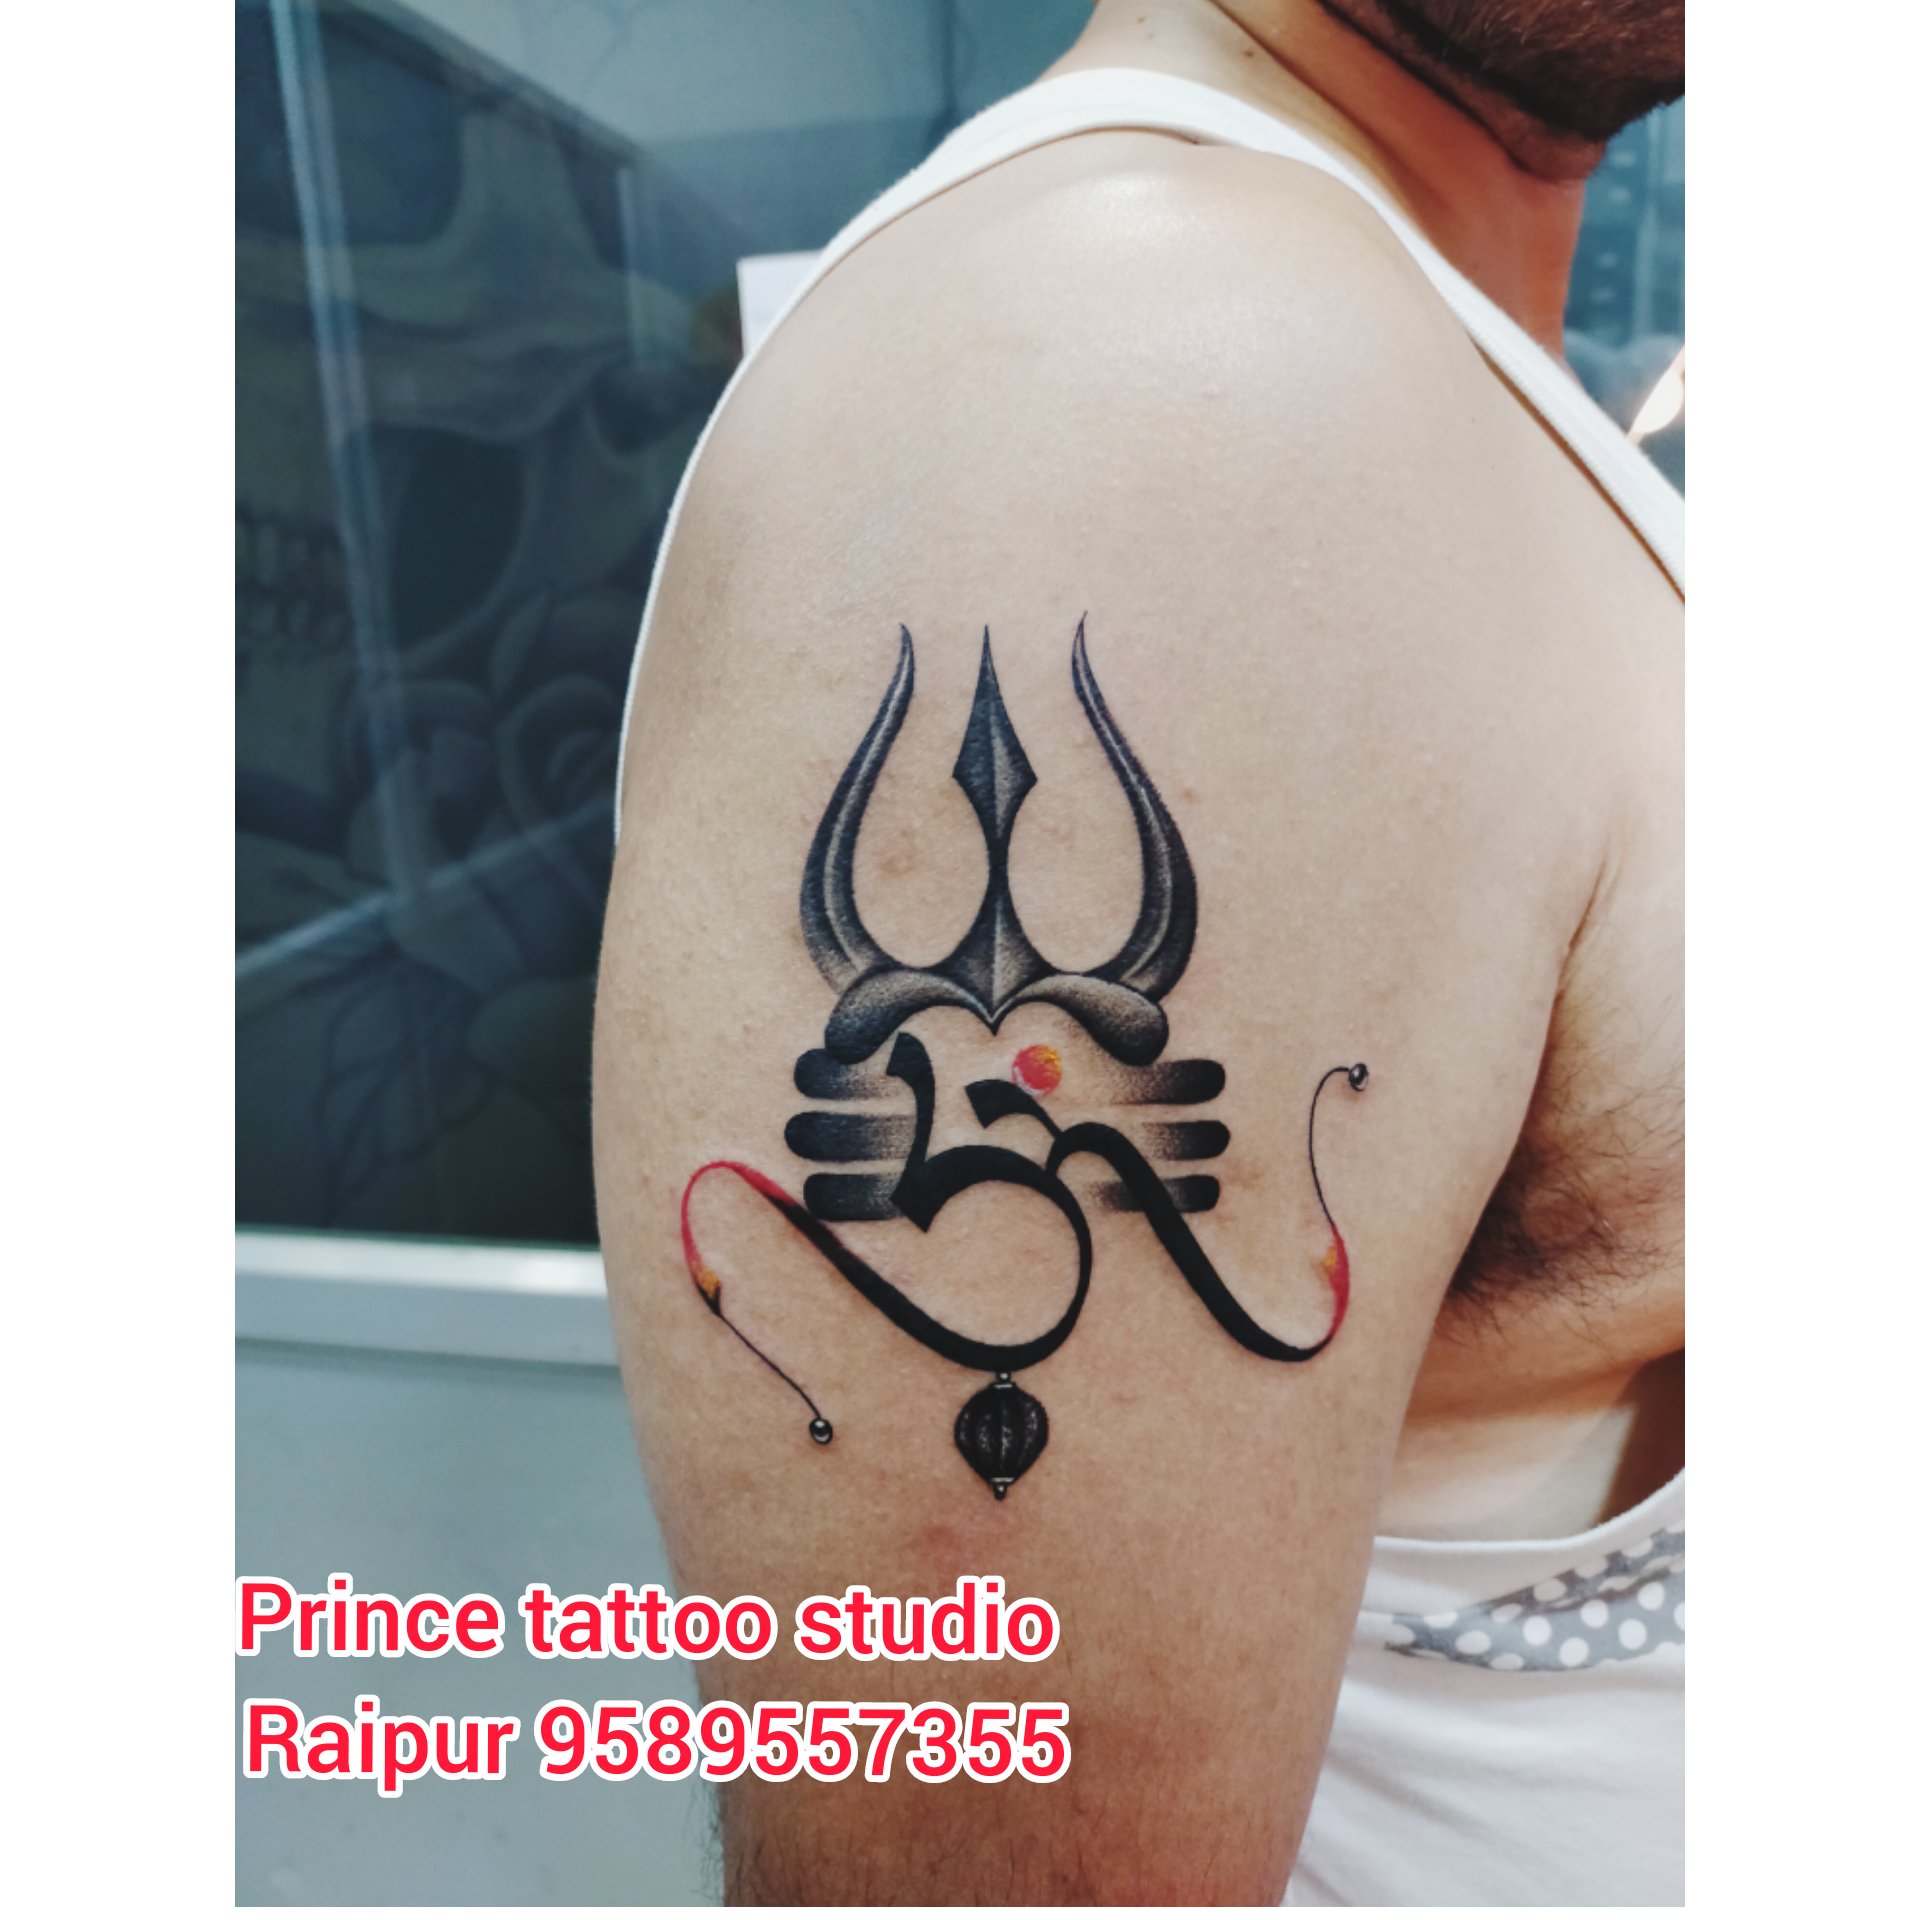 Share more than 111 tattoo rudraksha best